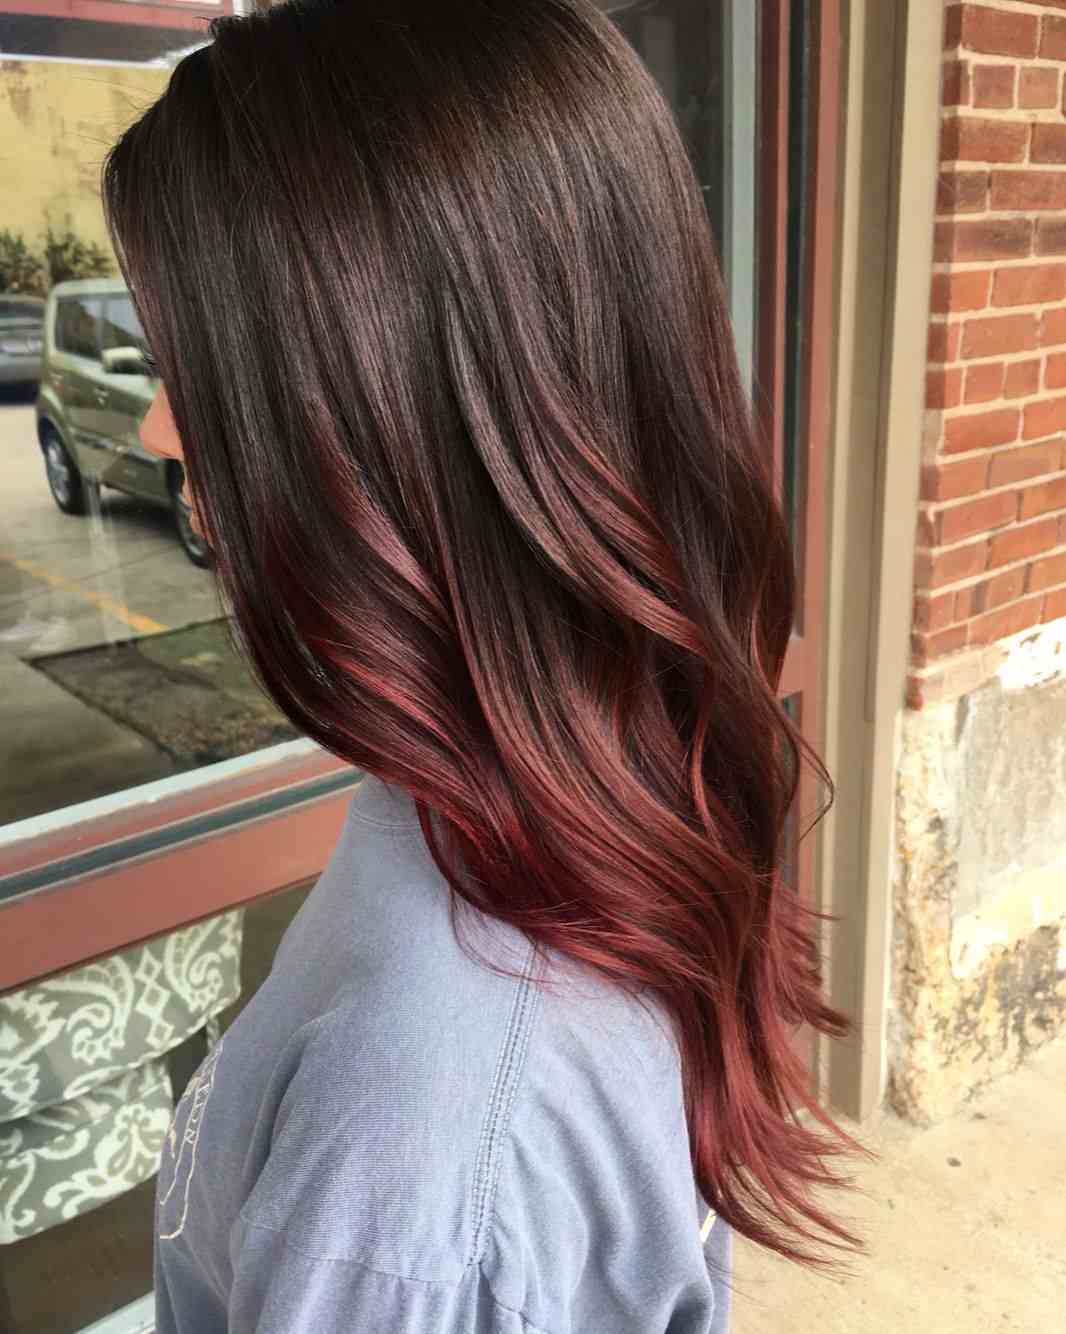 Balayage vermelho marrom dicas de cuidados, cabelo comprido, estilo, ideias de penteado